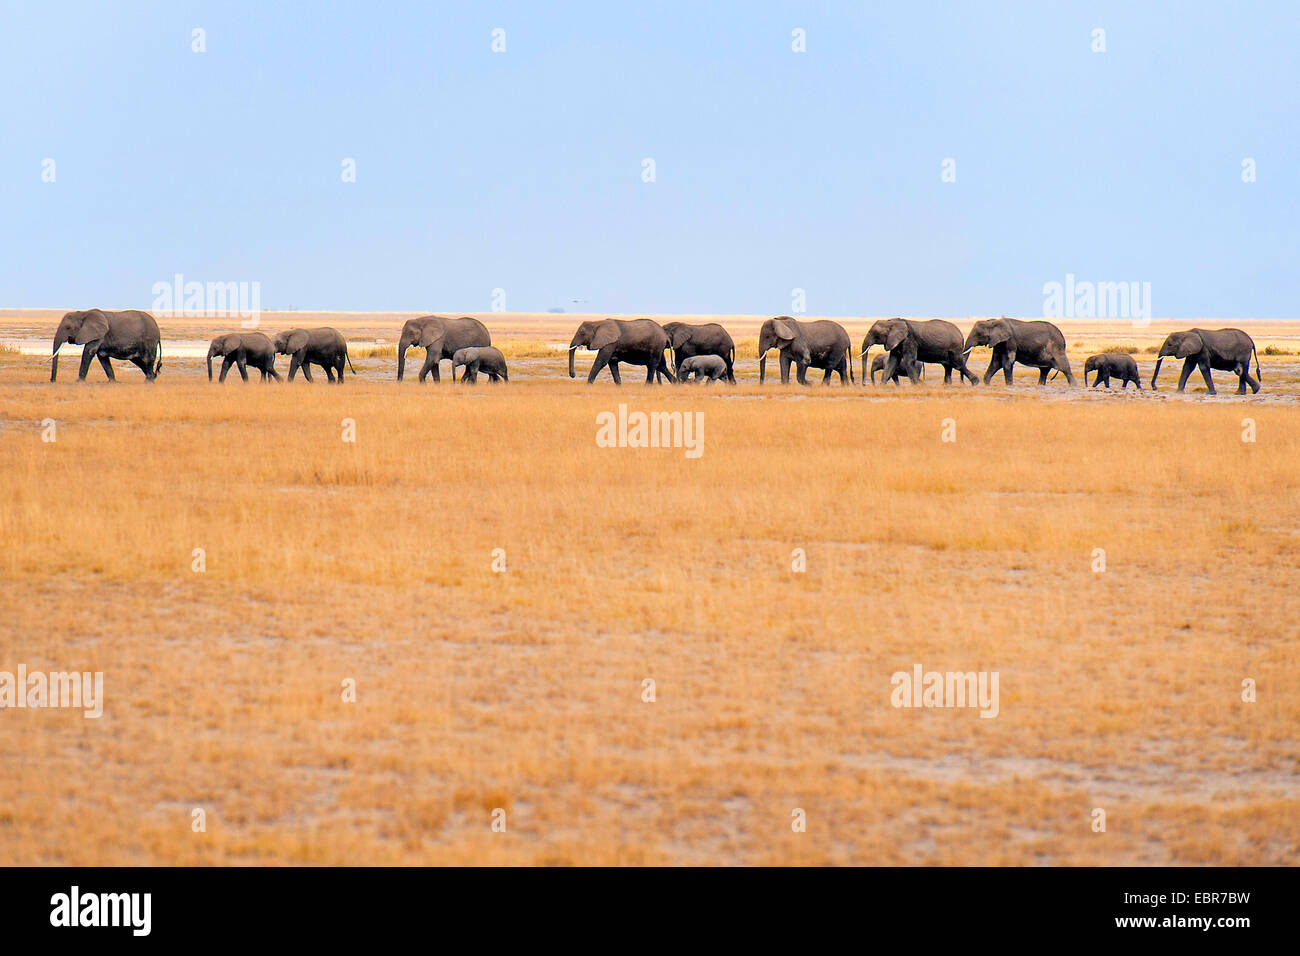 African elephant (Loxodonta africana), herd of elephants walking through the savannah, Kenya, Amboseli National Park Stock Photo